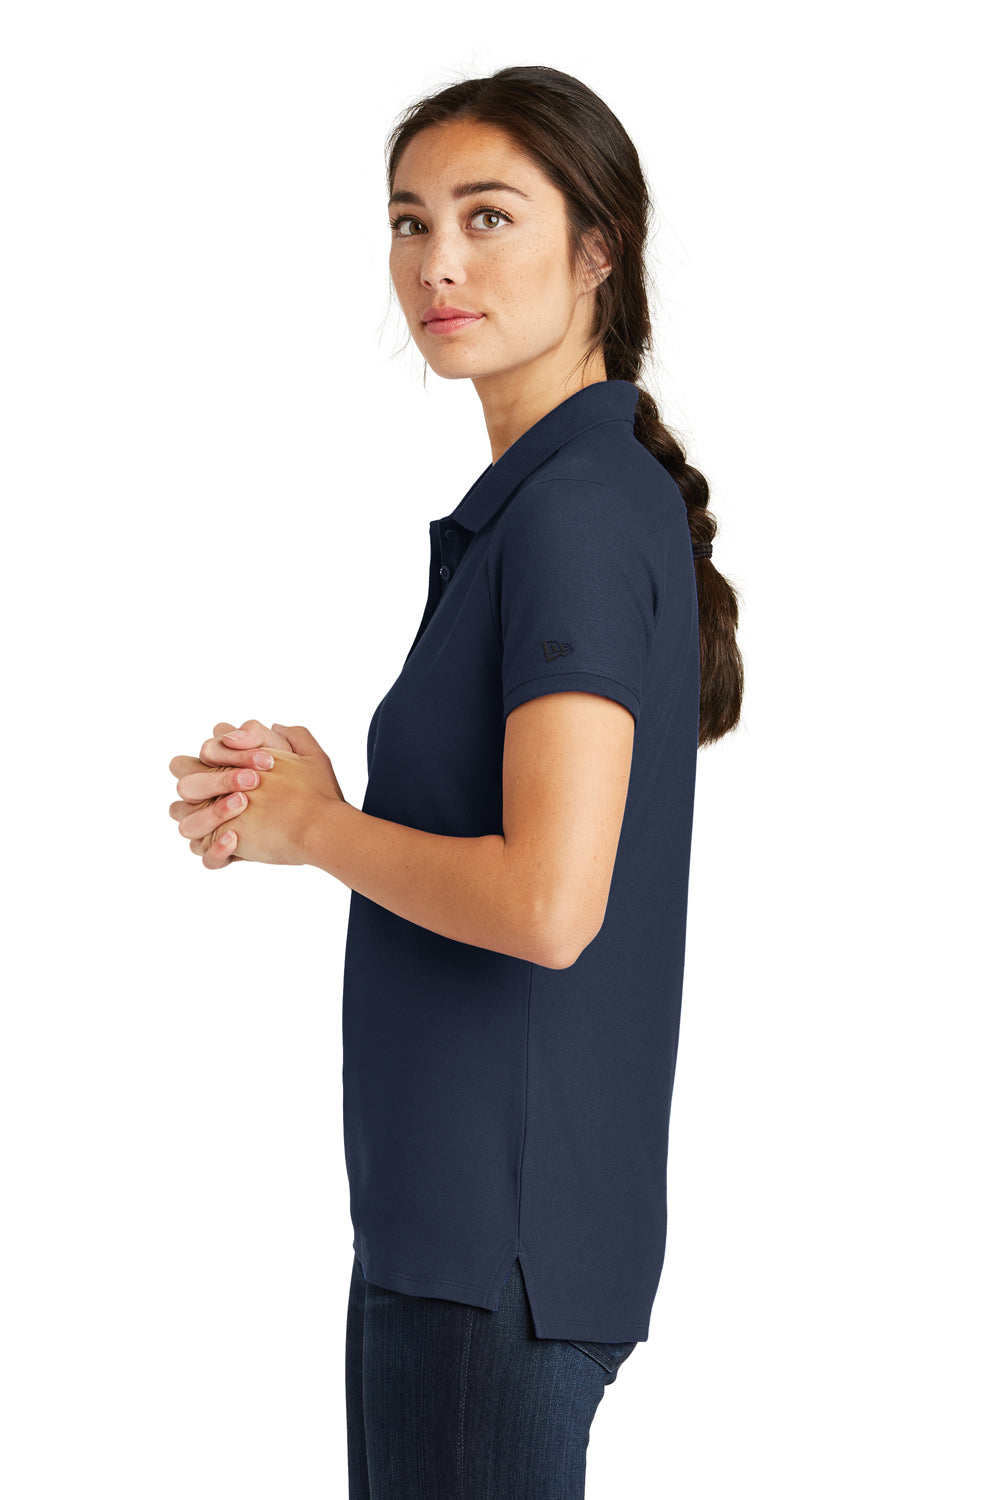 New Era LNEA300 Womens Venue Home Plate Moisture Wicking Short Sleeve Polo Shirt Navy Blue Side